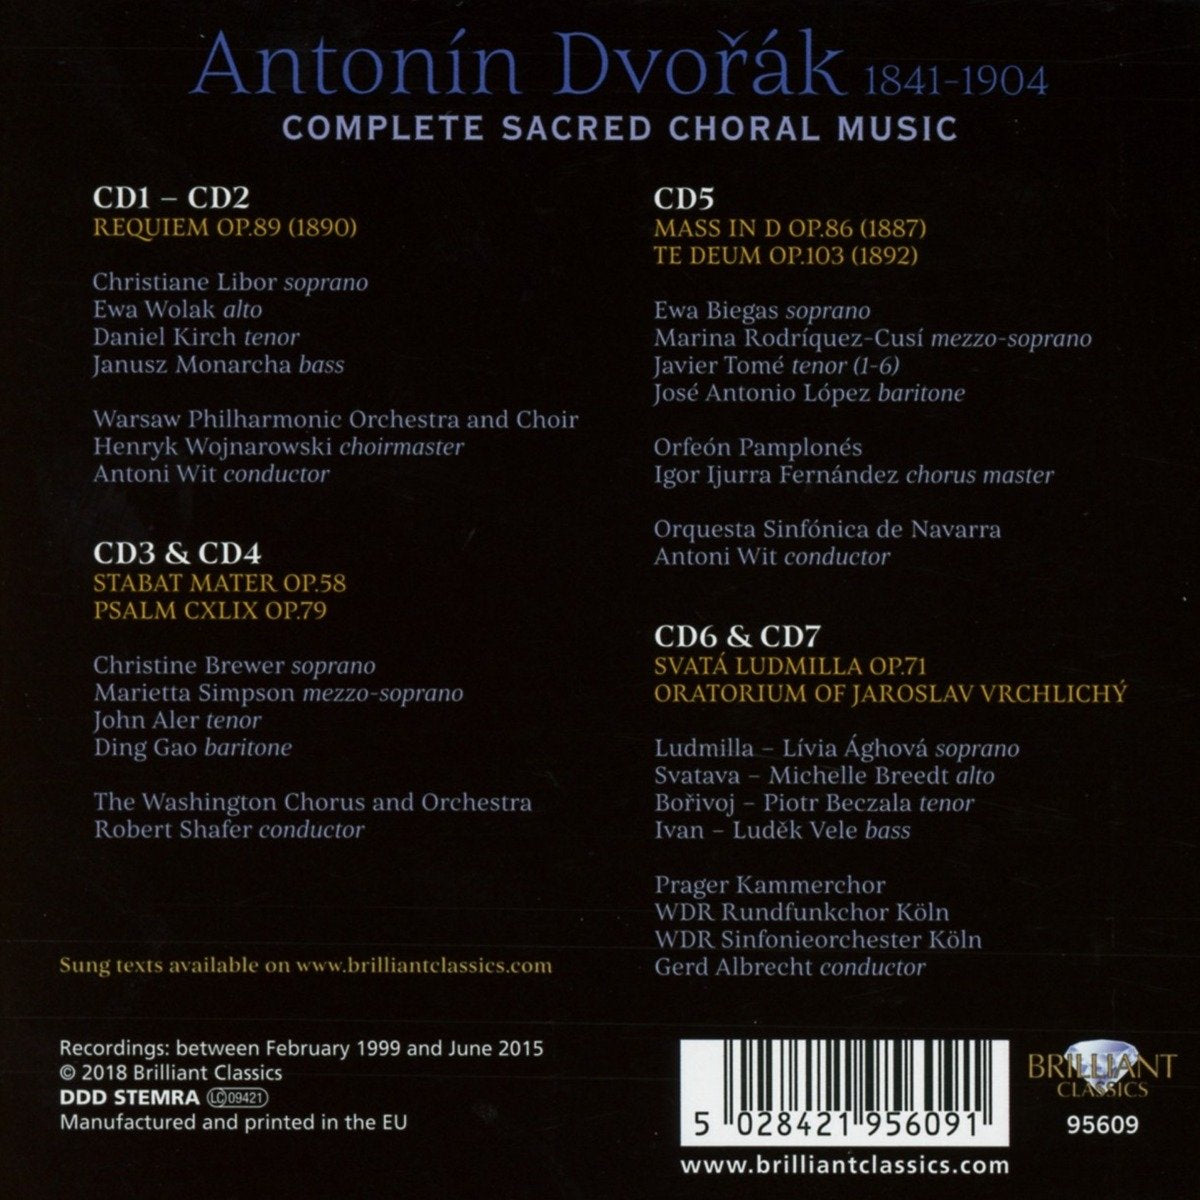 DVORAK: THE COMPLETE SACRED CHORAL MUSIC (7 CDS)